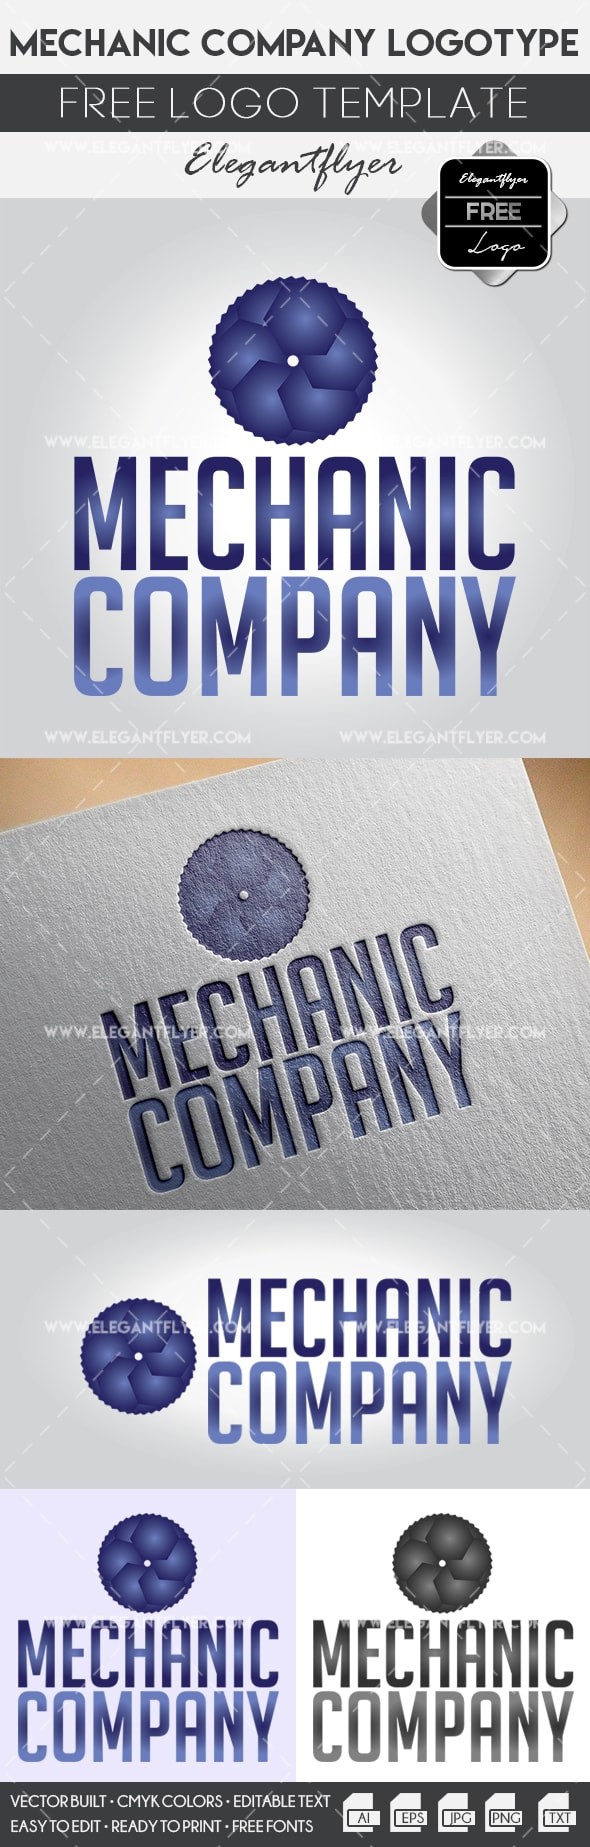 Mechanic Company by ElegantFlyer